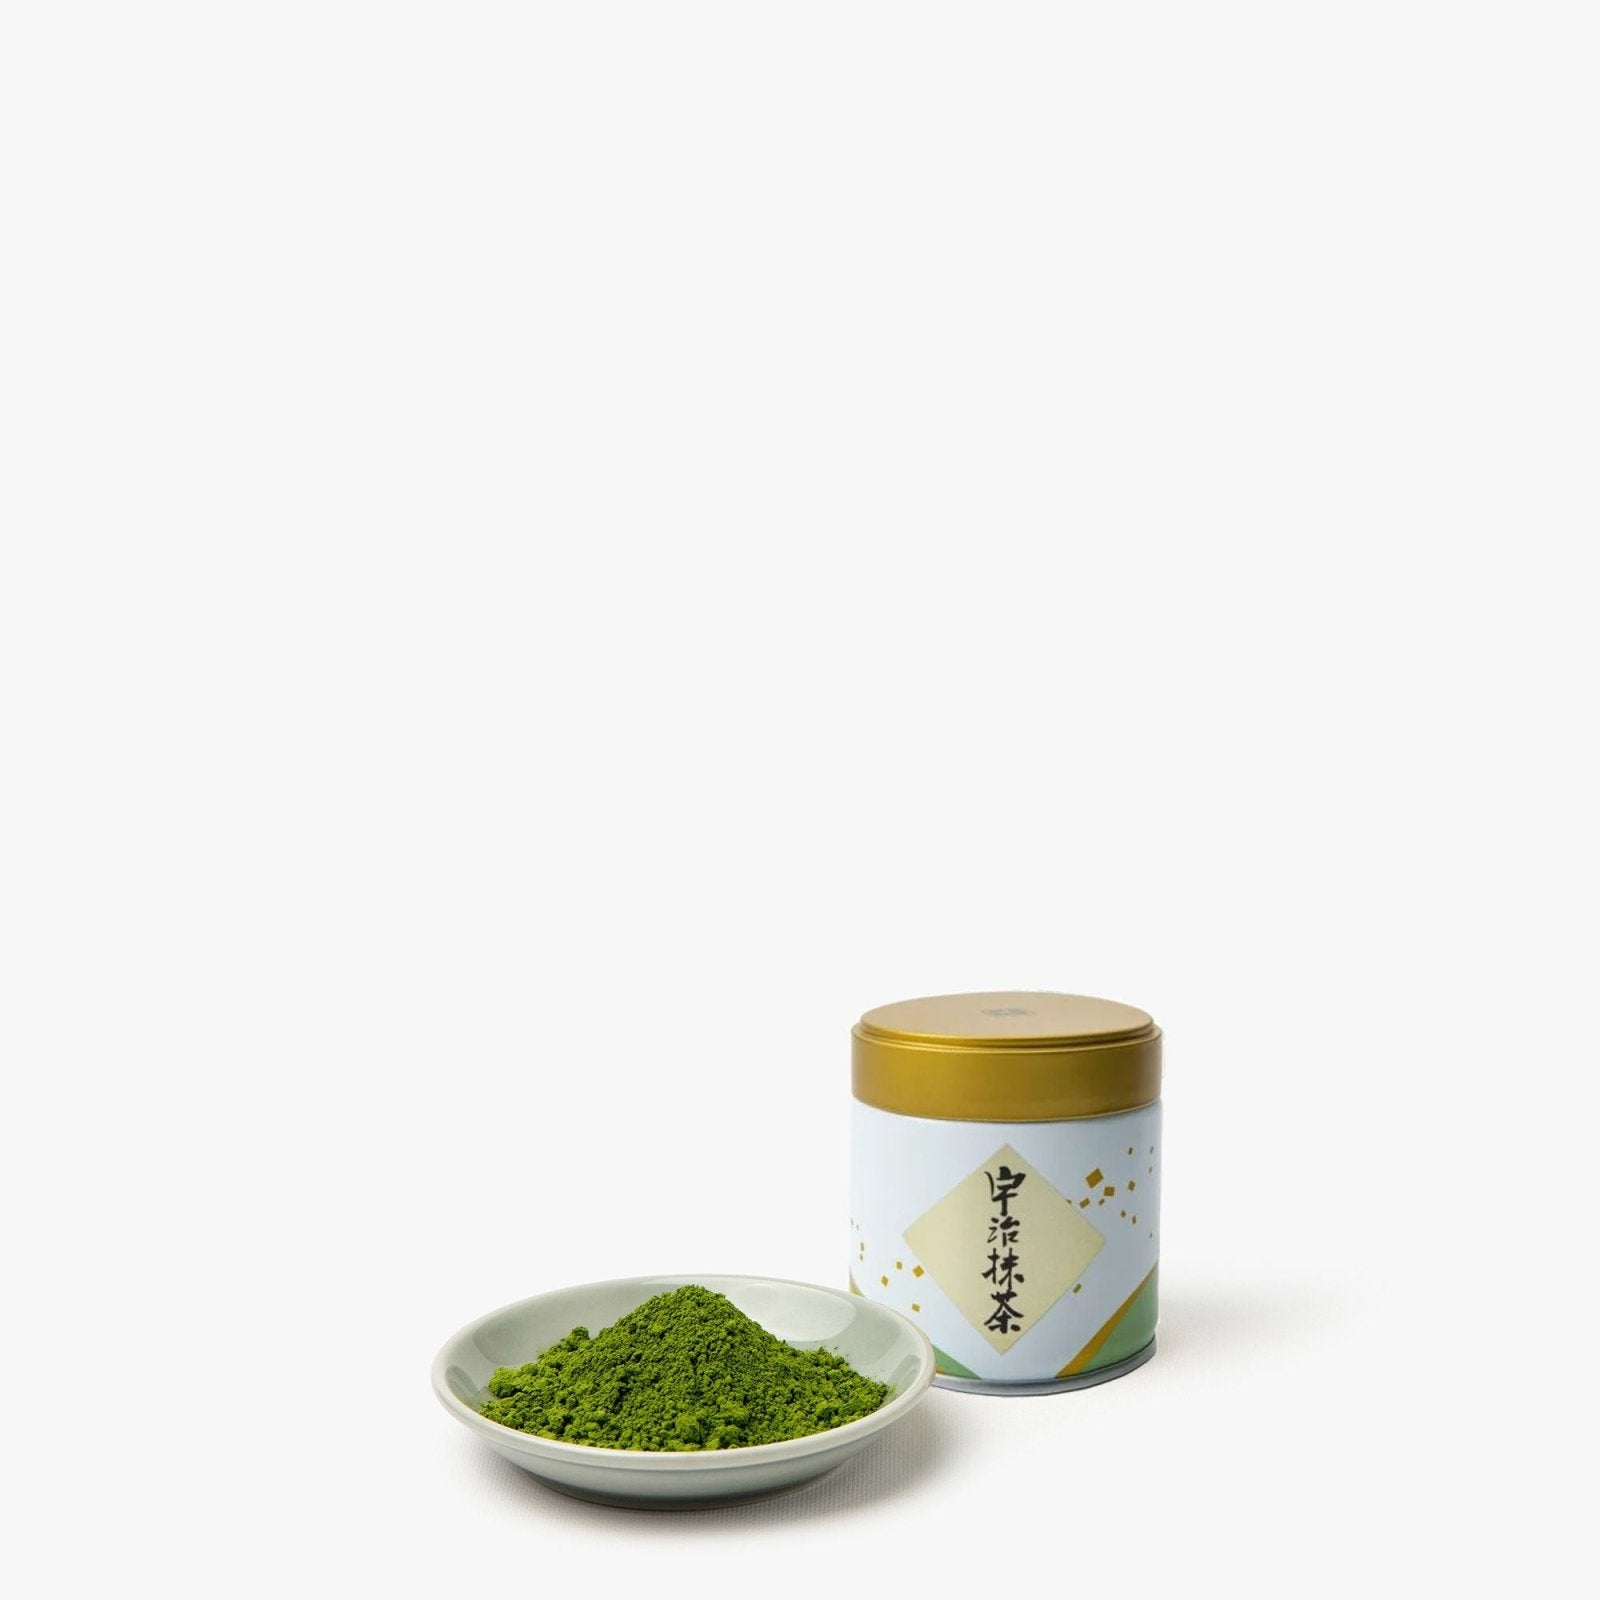 Thé vert en poudre matcha de Uji - en vrac - 40g - YAMASHIRO JP -iRASSHAi